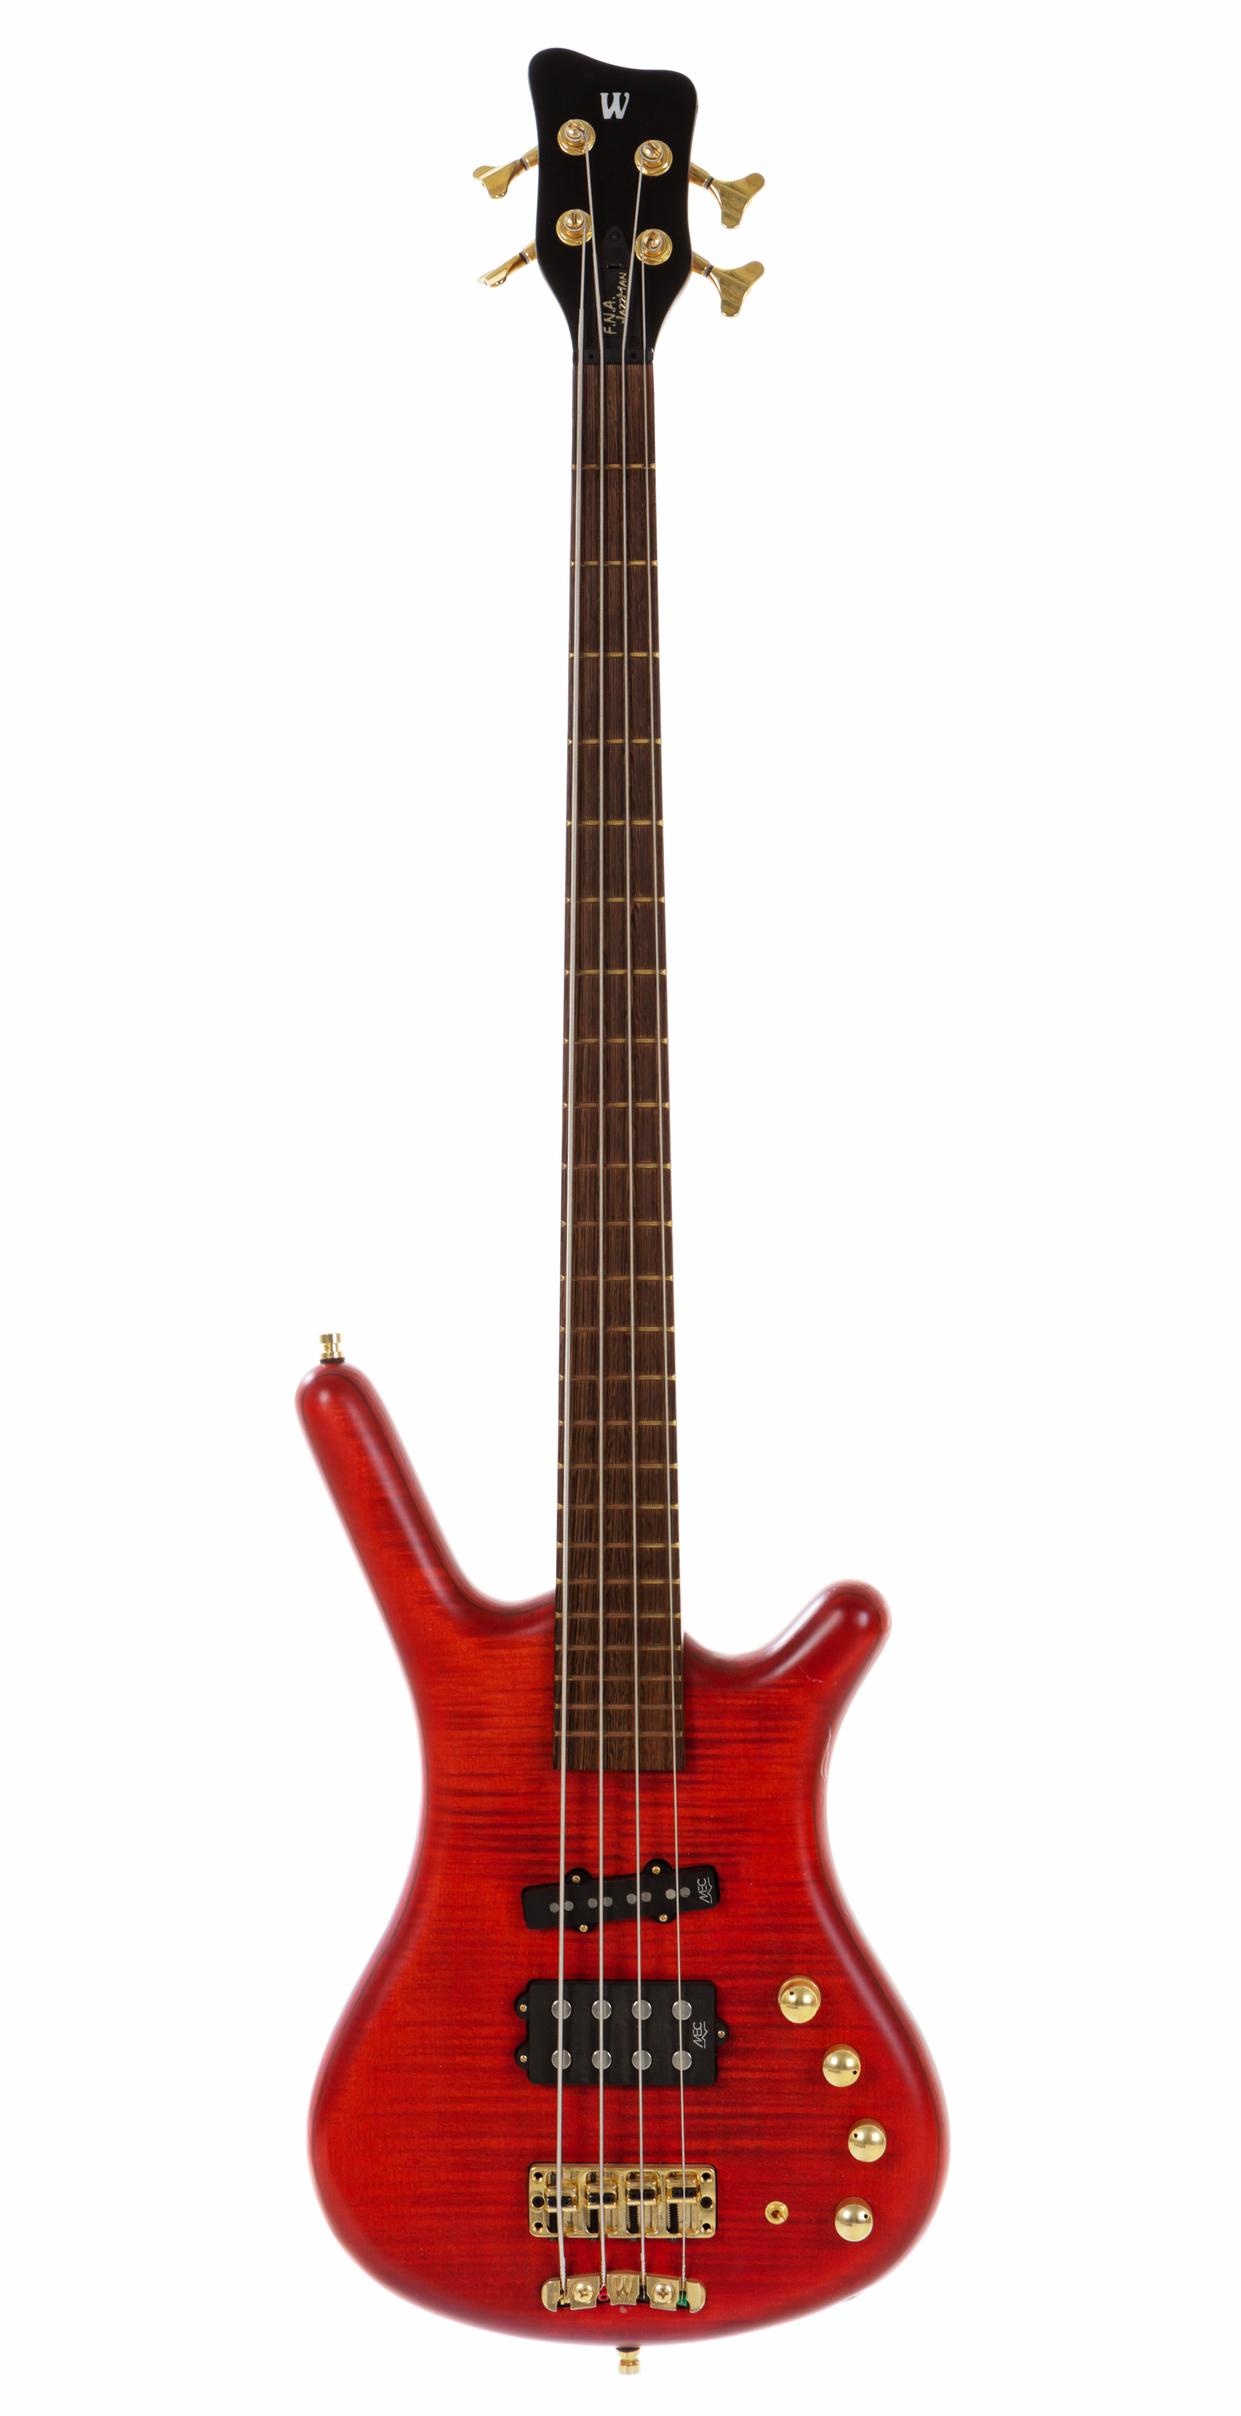 TMB100 IV 2015 Golden Electric Bass Guitar